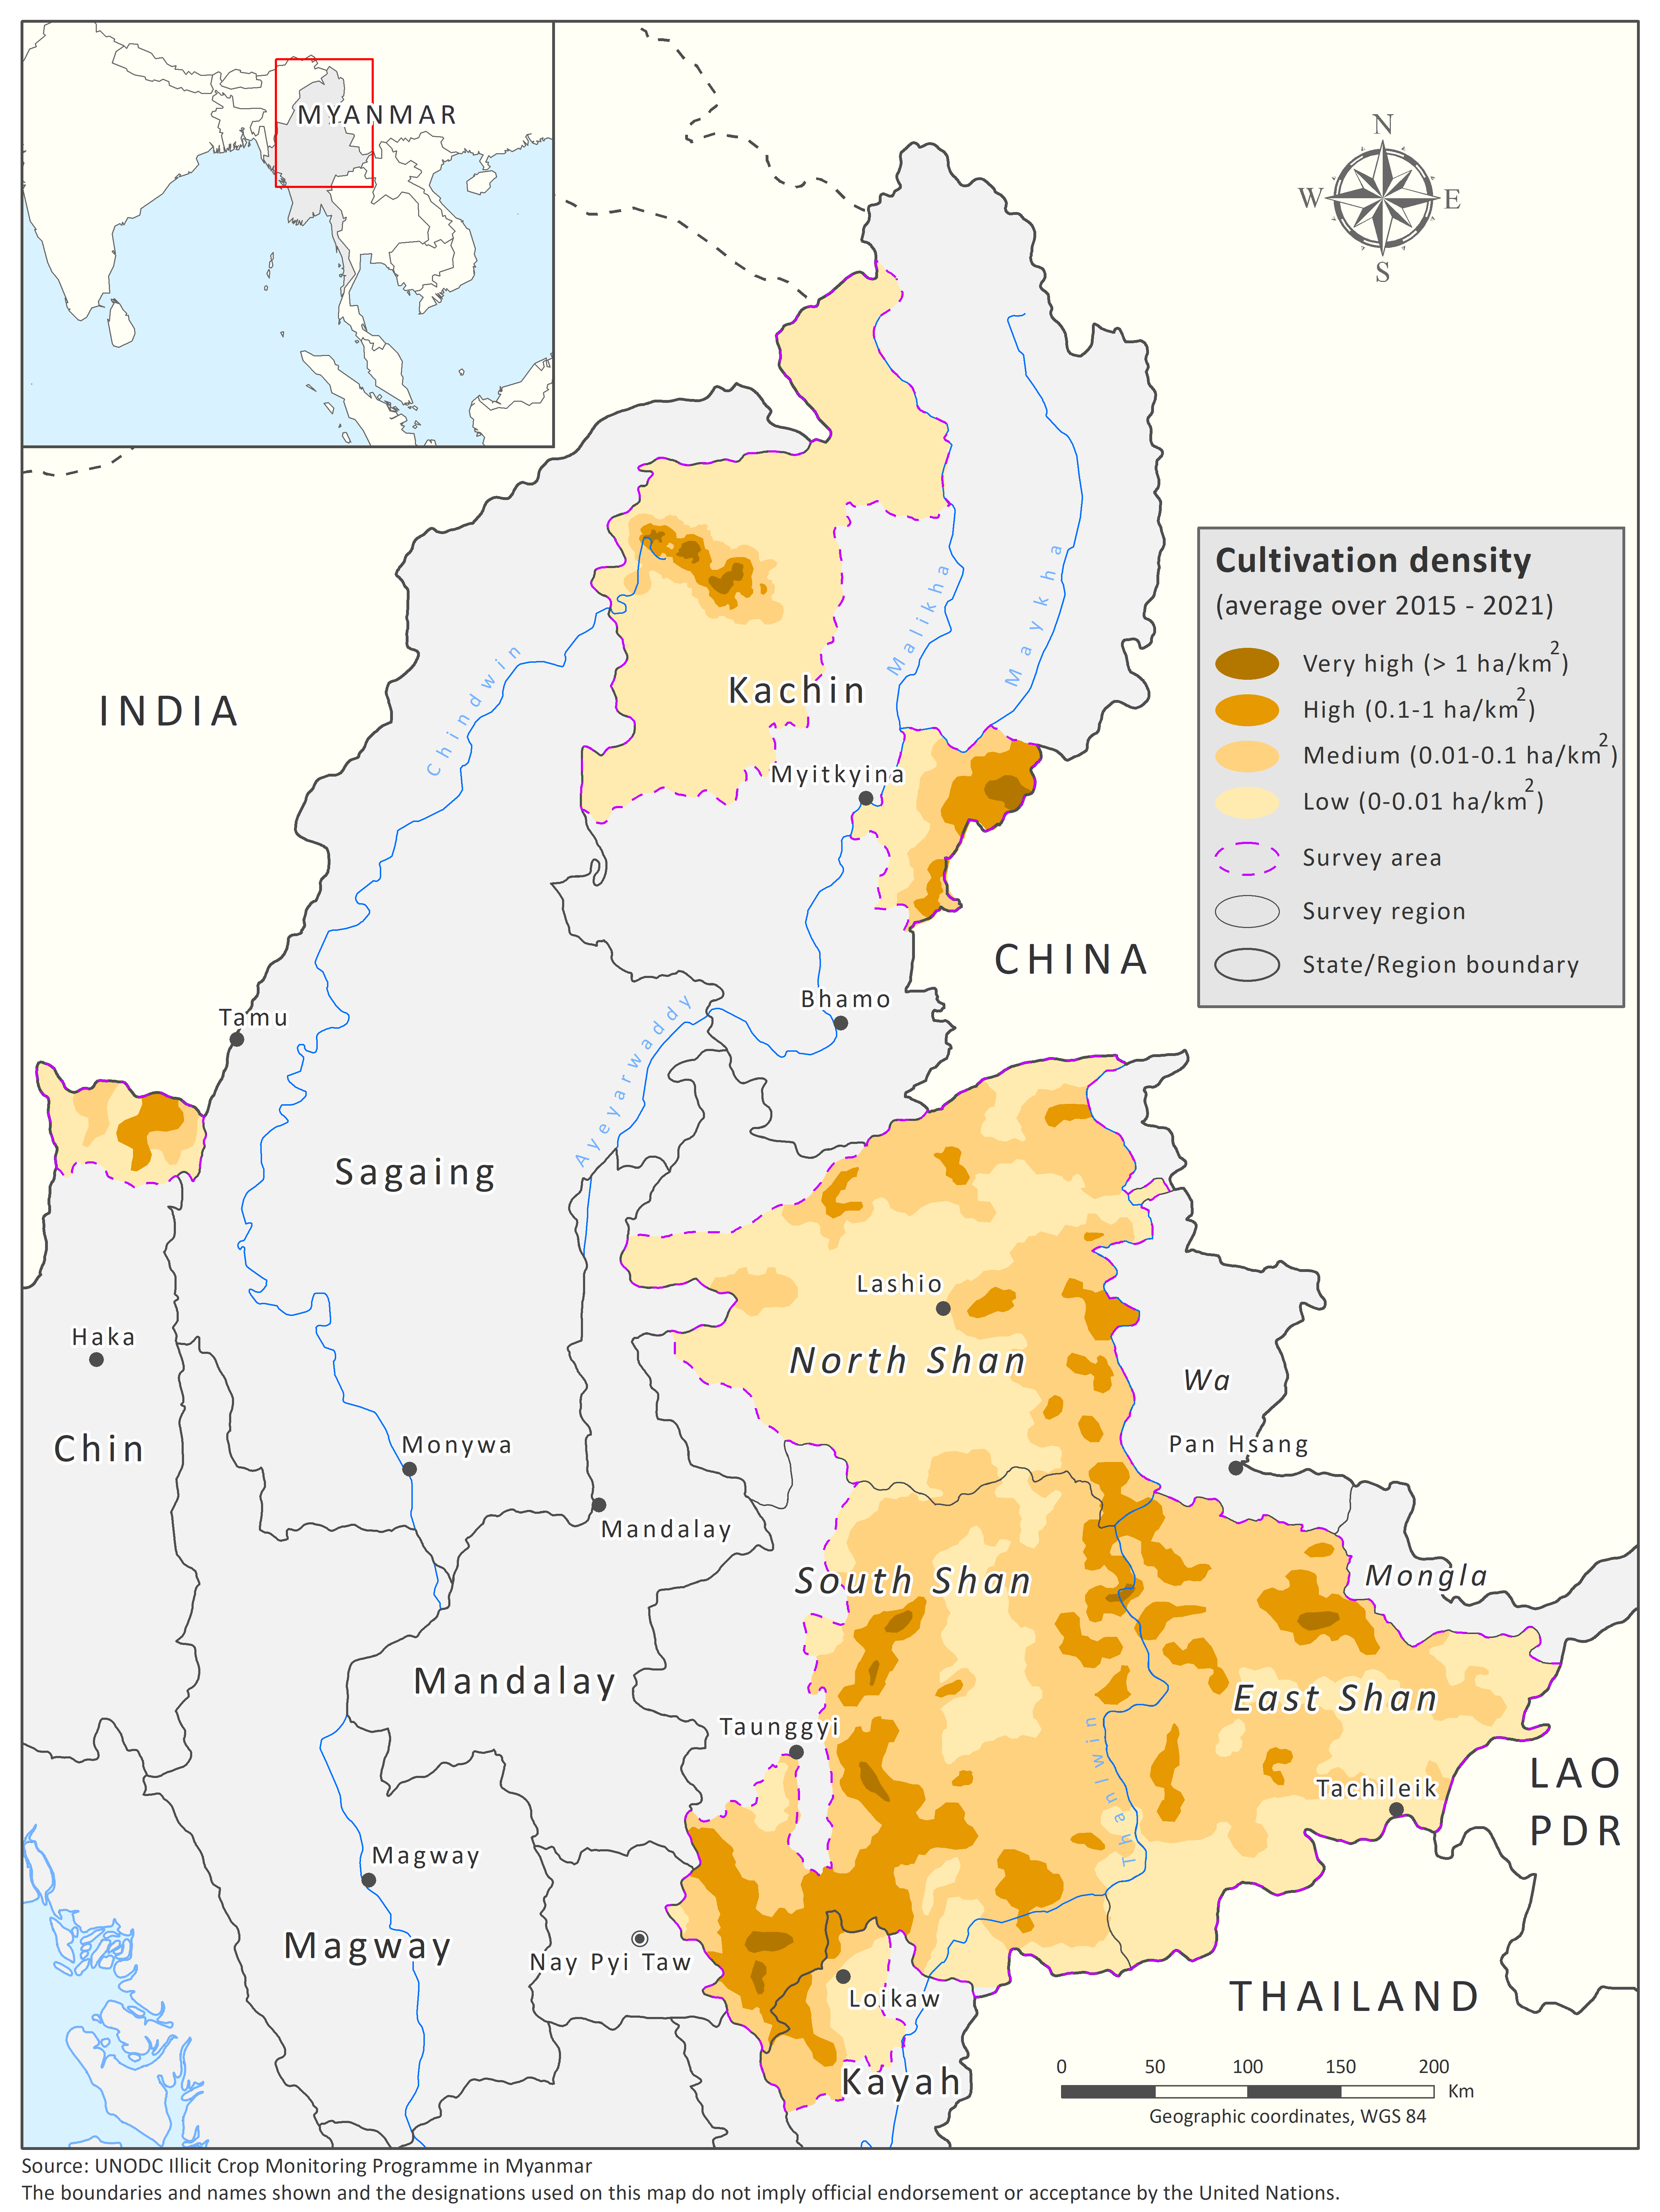 Opium poppy cultivation density in Myanmar (average over the period 2015-2021 in ha/km²)